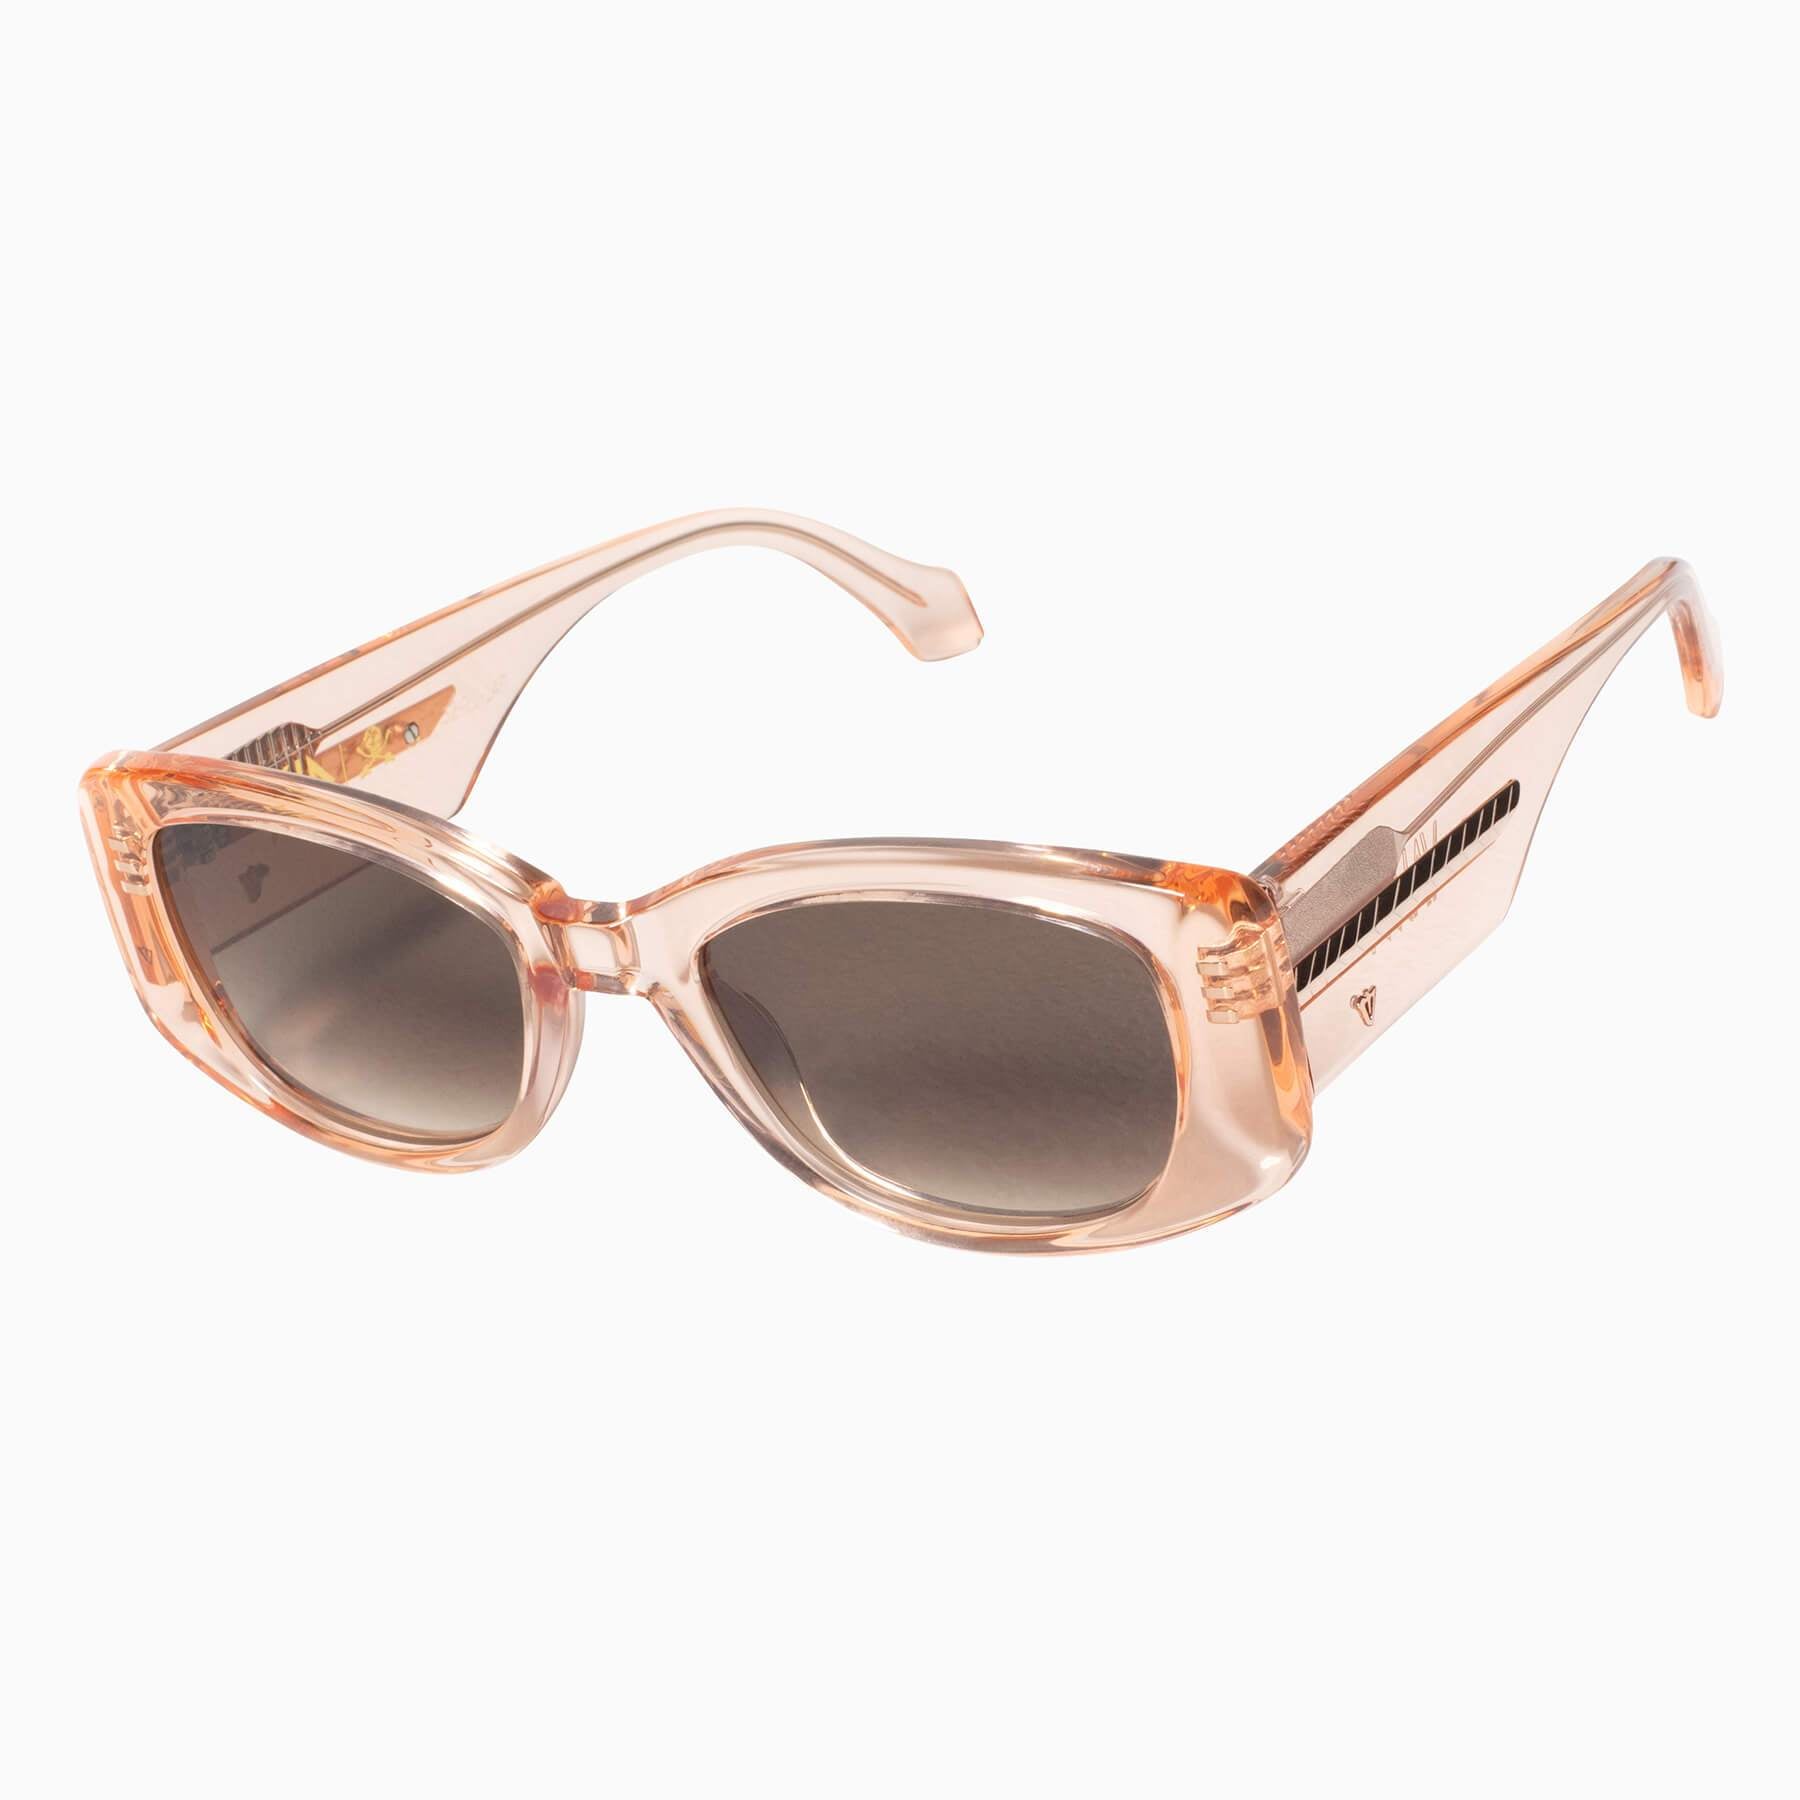 Sid | Sunglasses - Crystal Pink w. Rose Gold Metal Trim / Brown Gradient